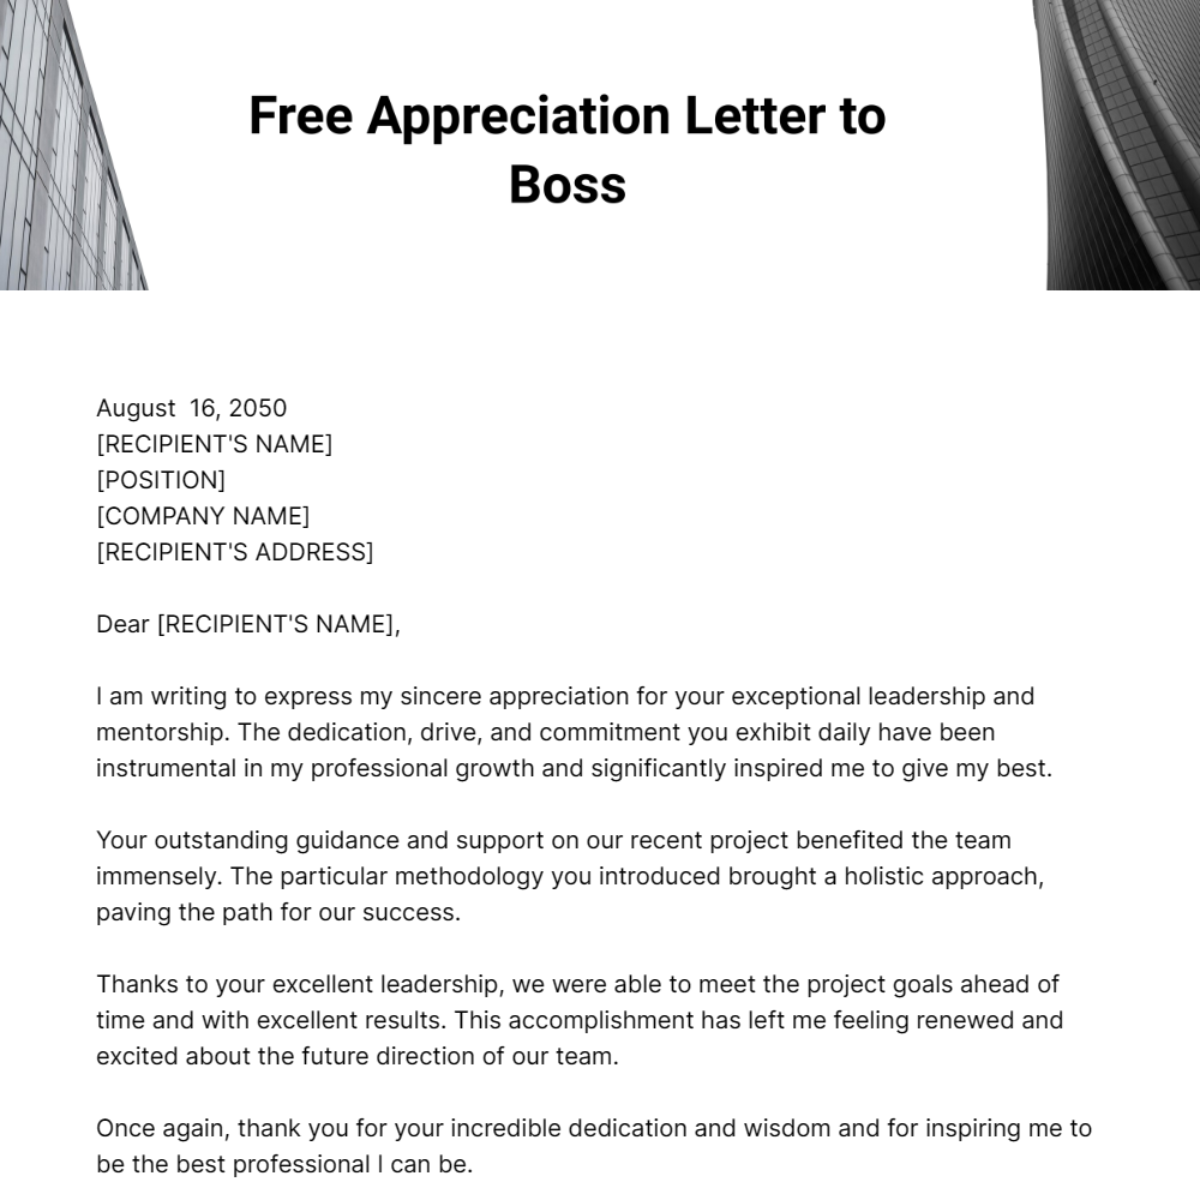 FREE Appreciation Letter Templates & Examples - Edit Online & Download